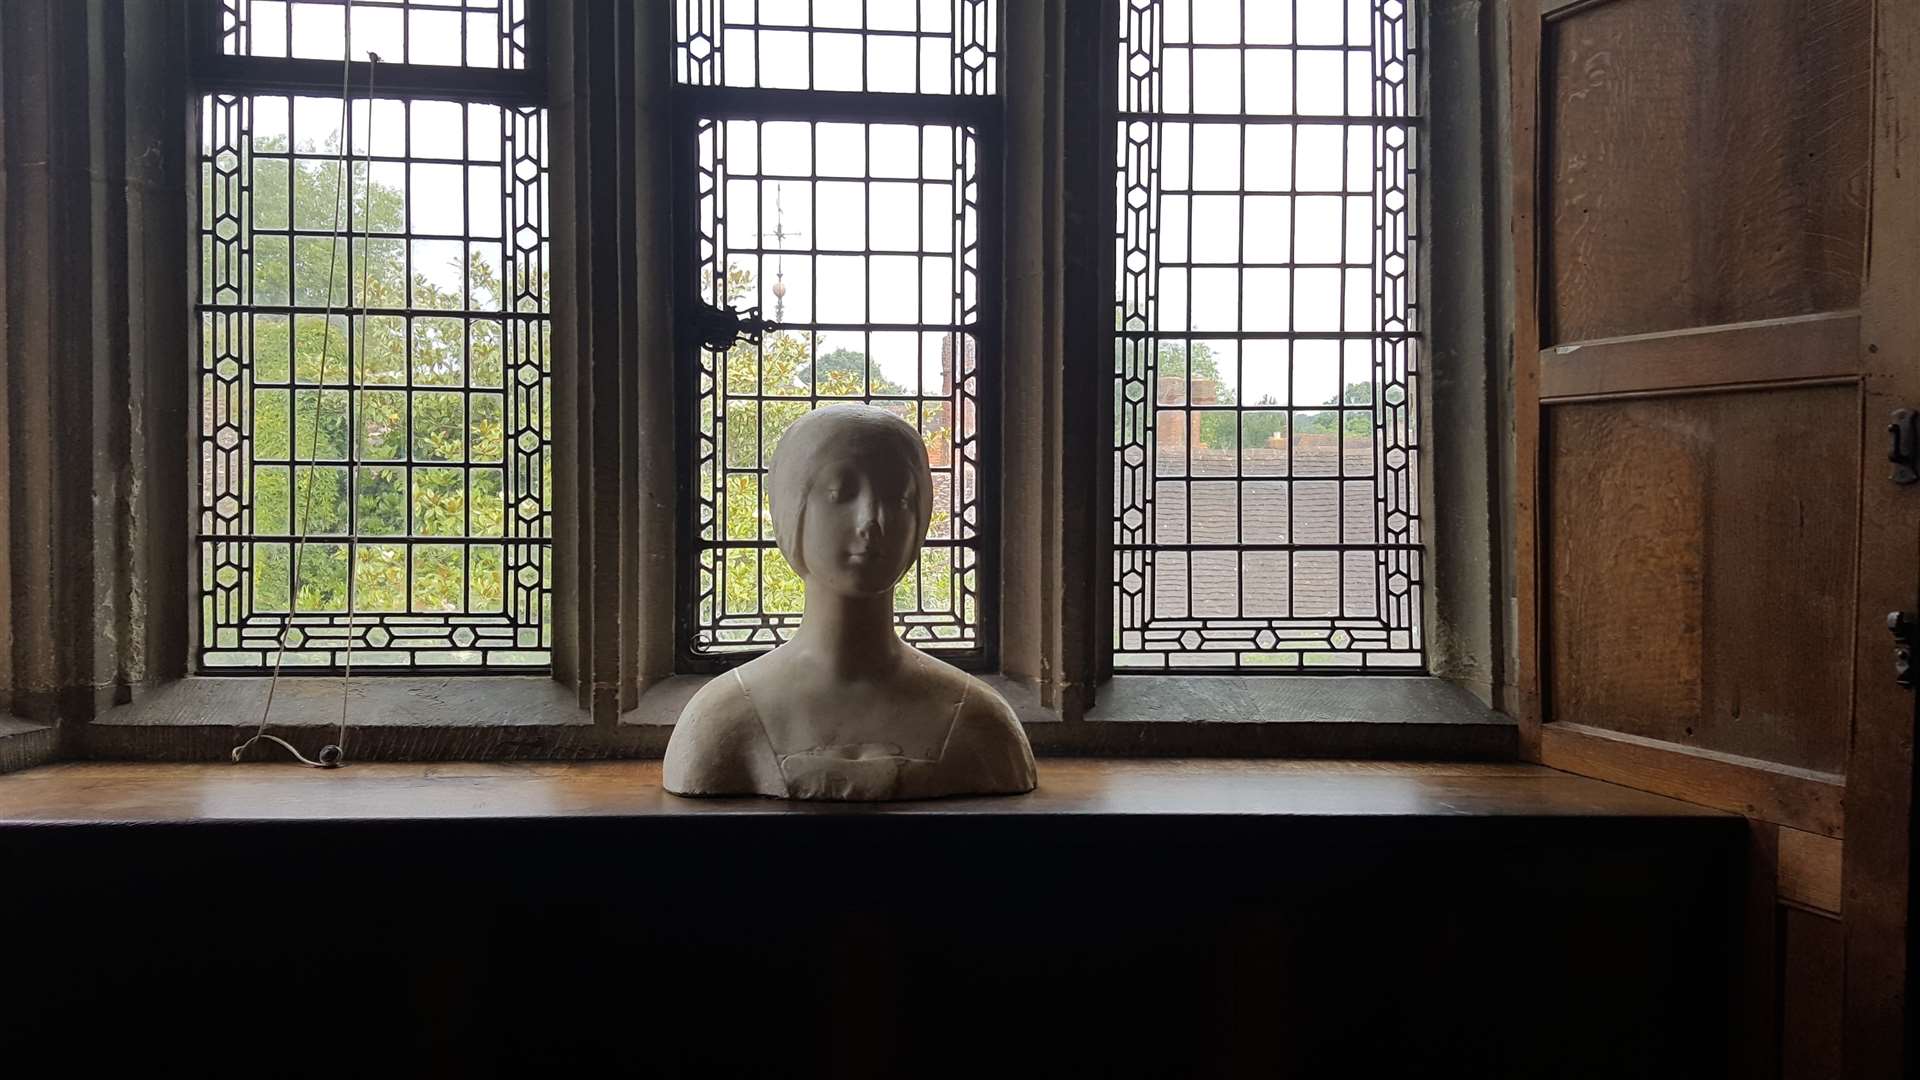 Anne Boleyn's bedroom in Hever Castle boasts a bust of the former queen